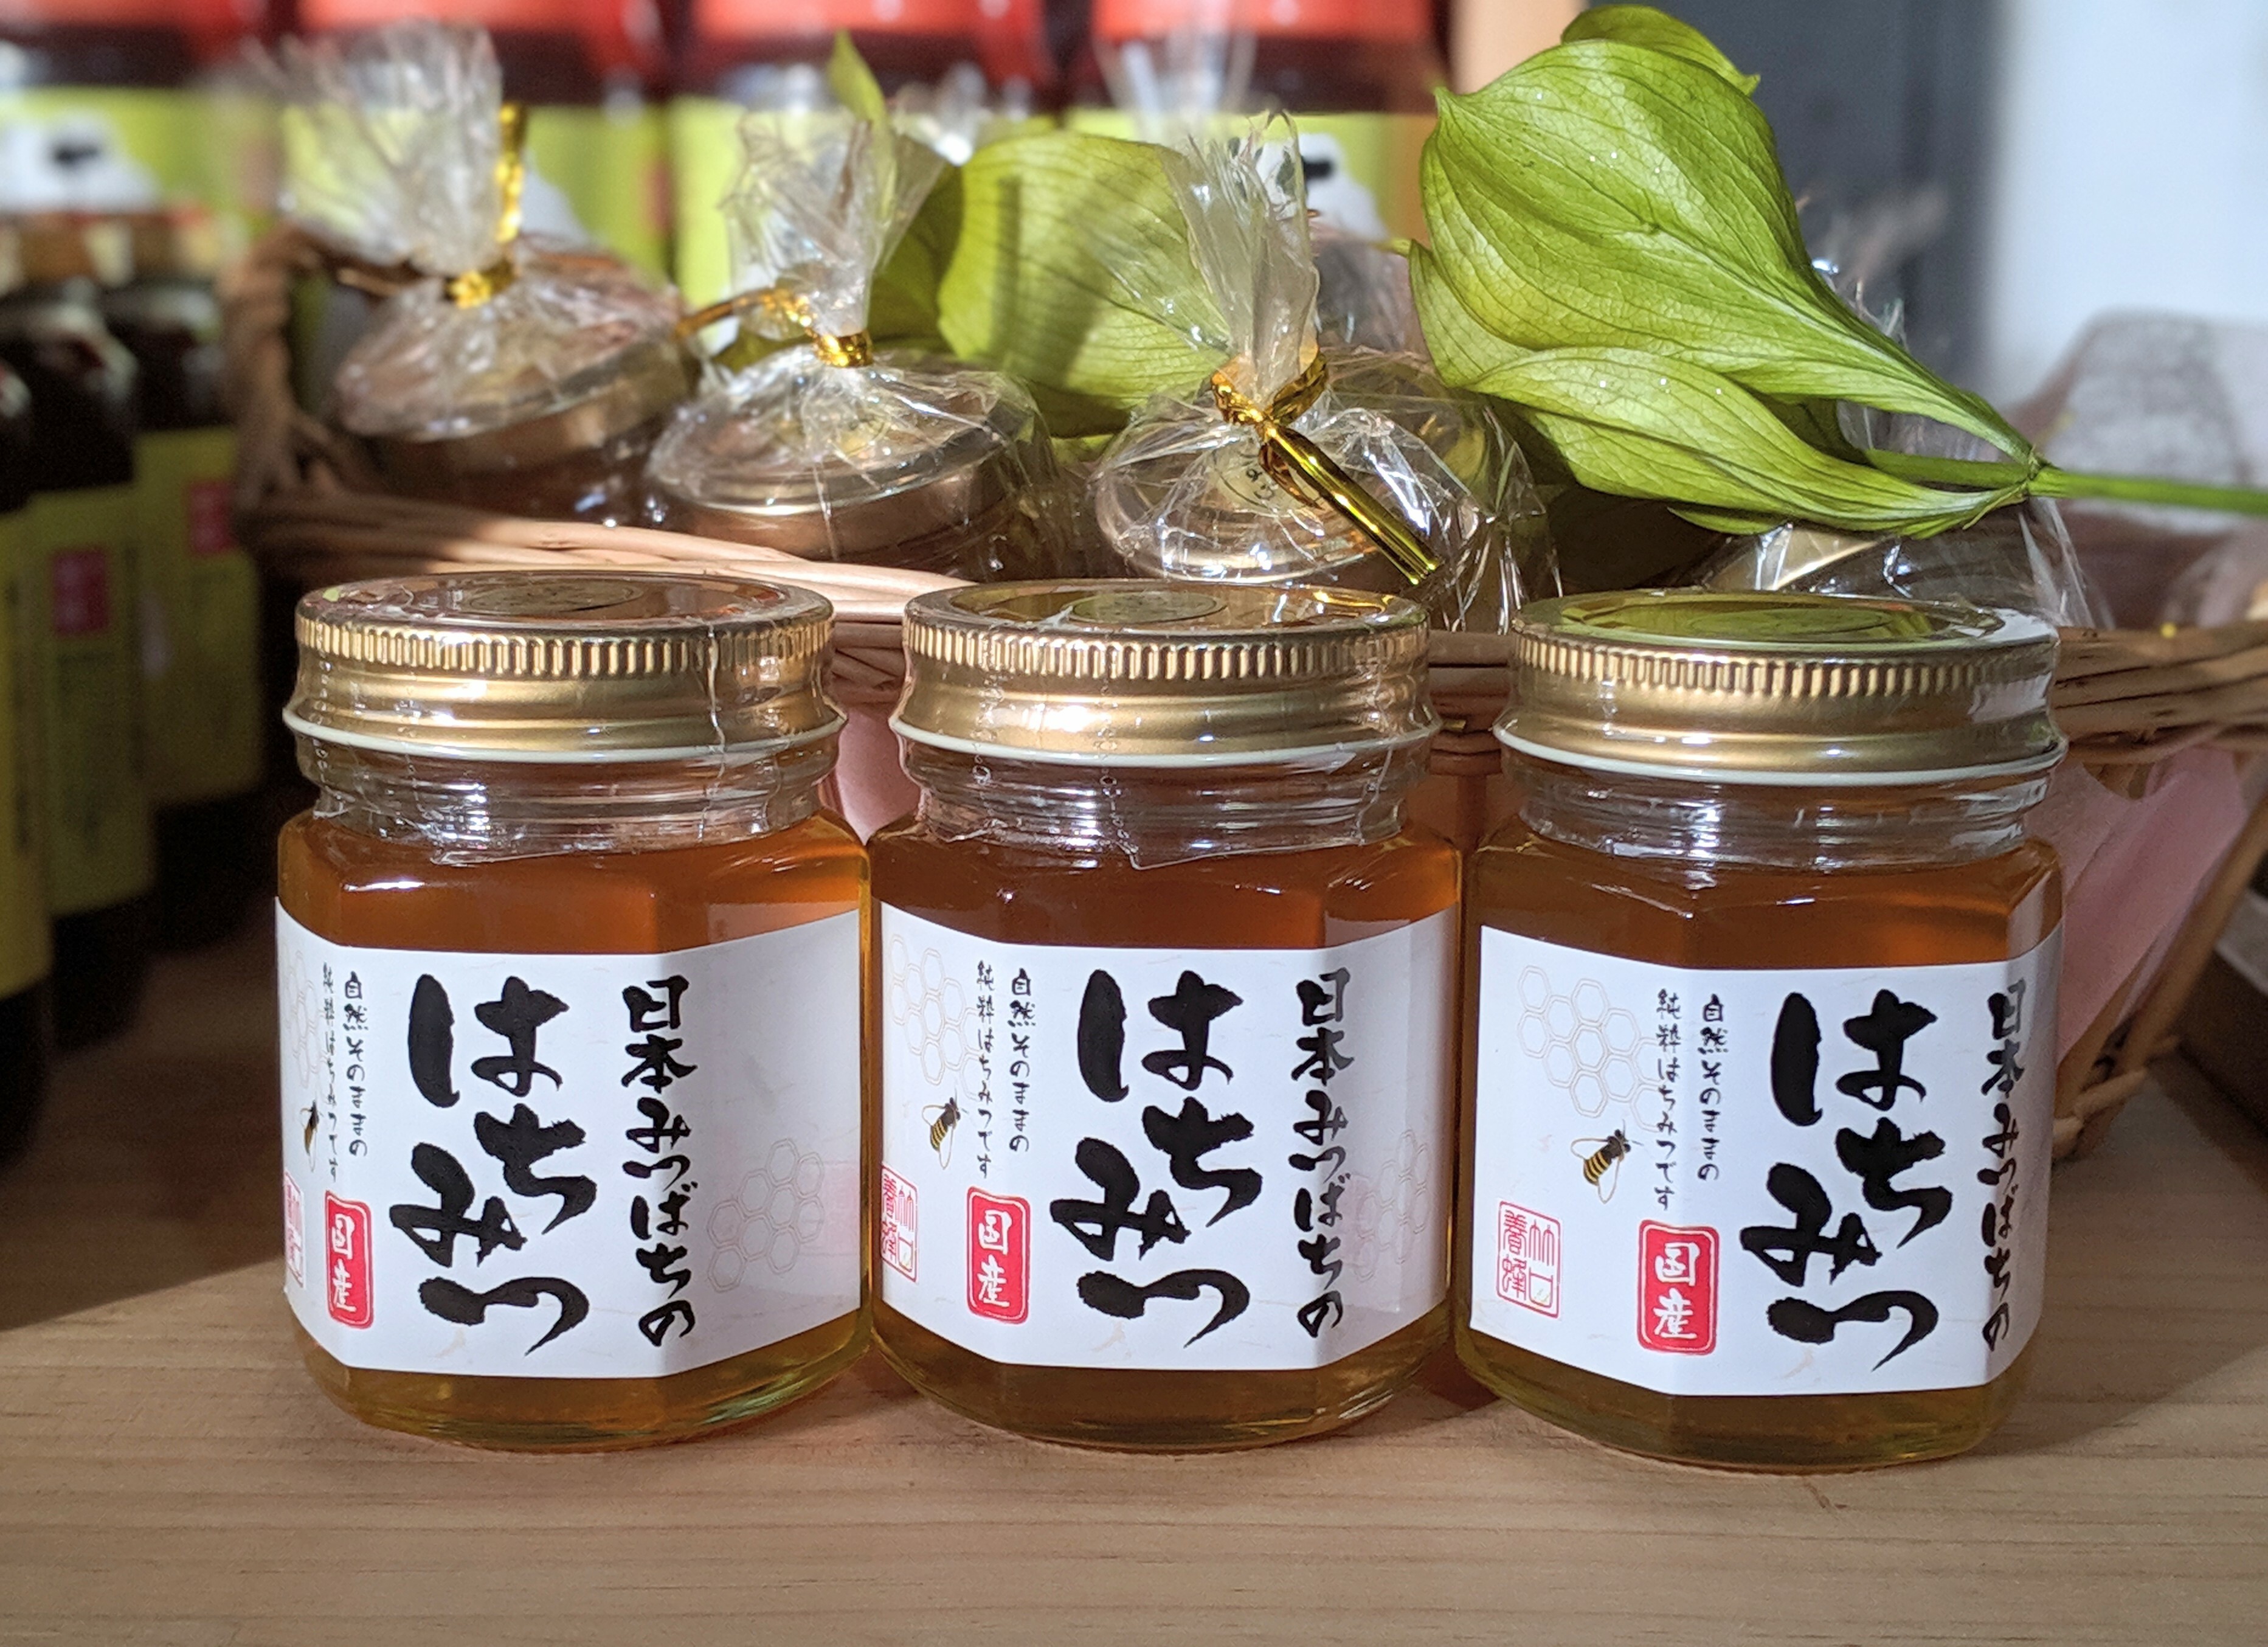 蜂蜜 - Honey - JapaneseClass.jp